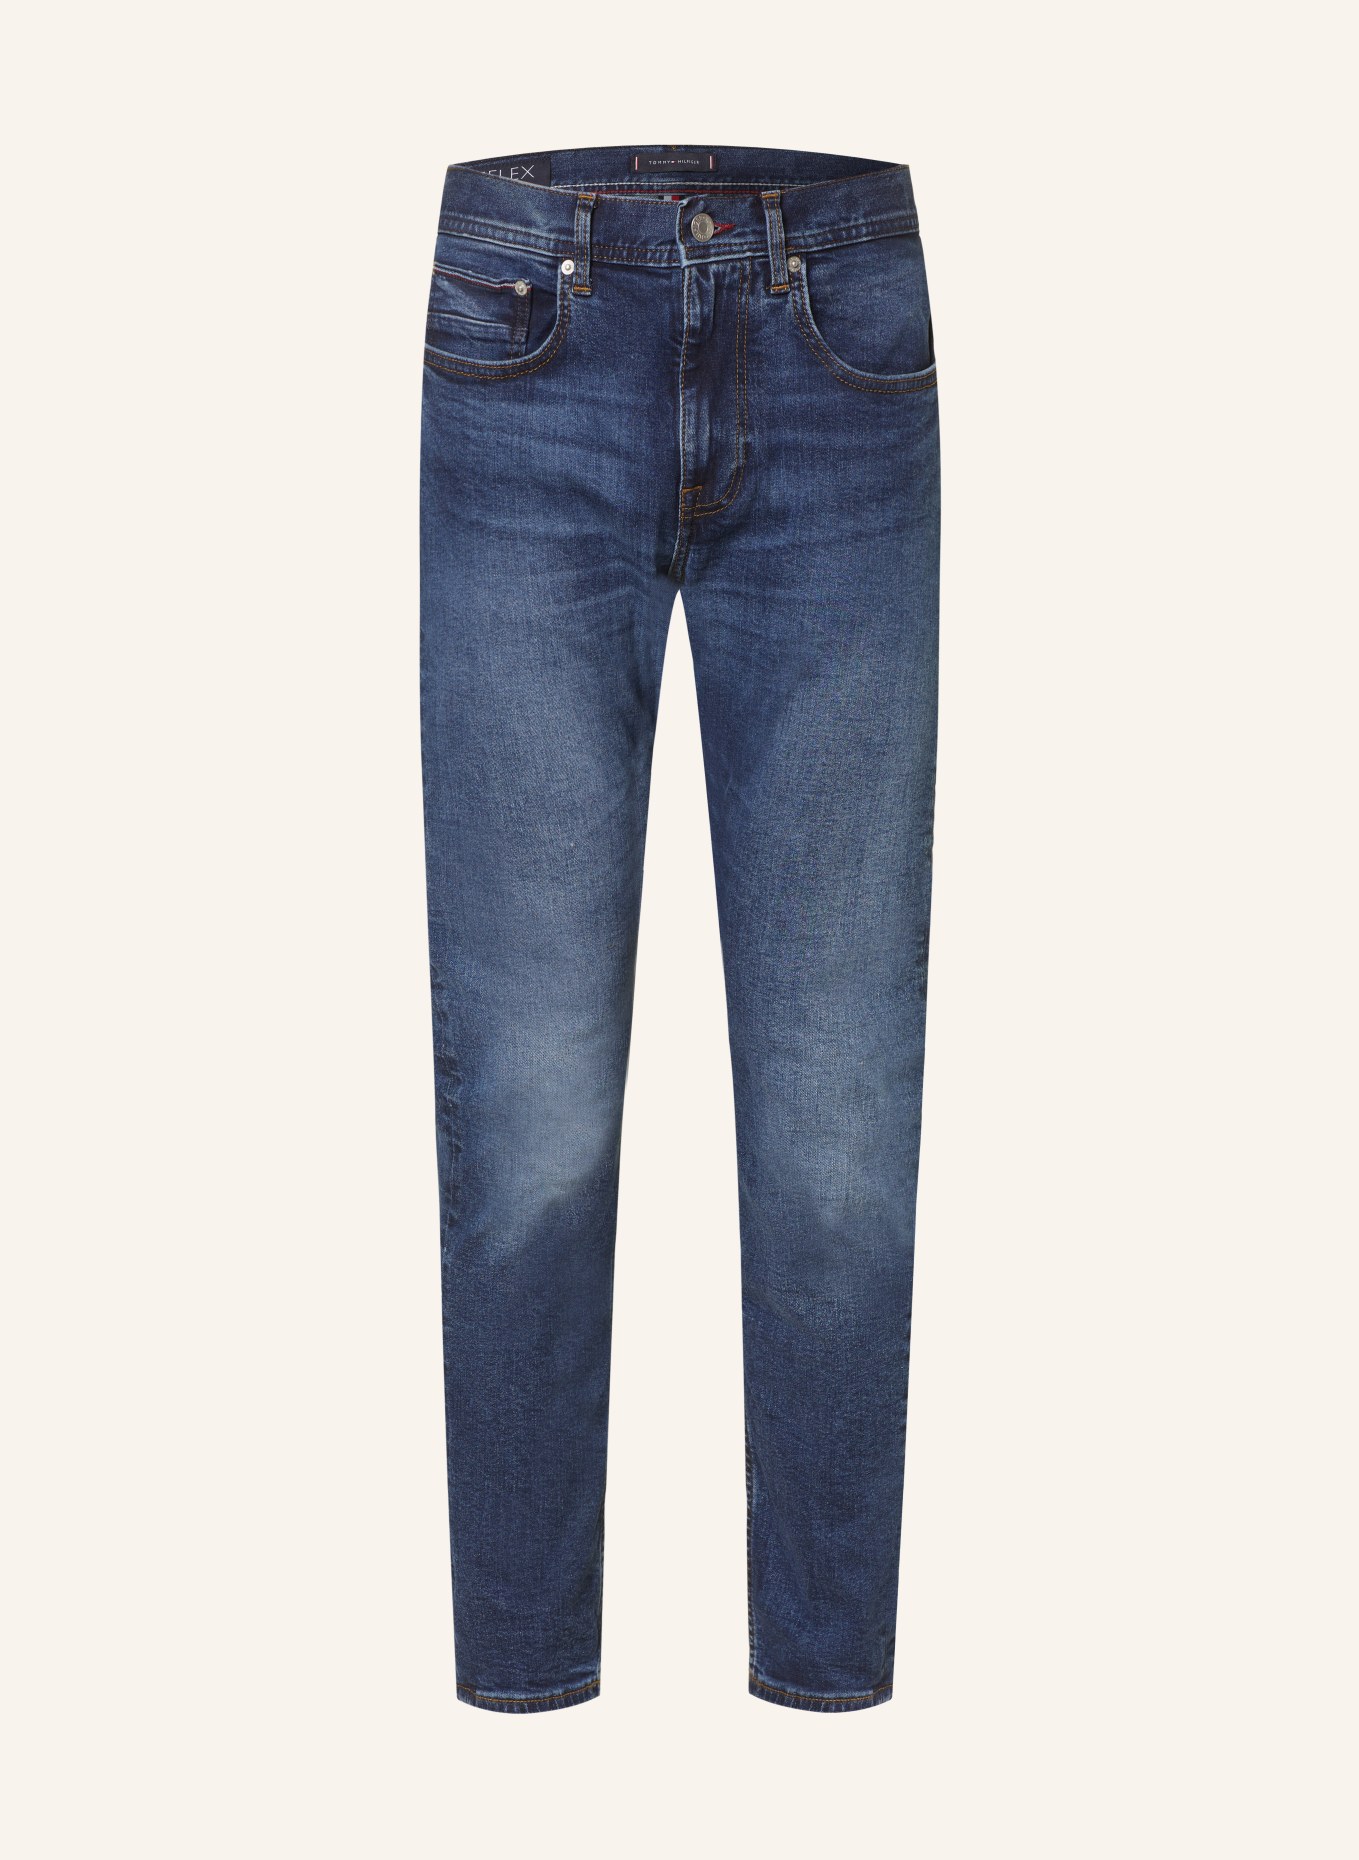 TOMMY HILFIGER Jeans HOUSTON Slim Tapered Fit, Farbe: 1BK Simone (Bild 1)